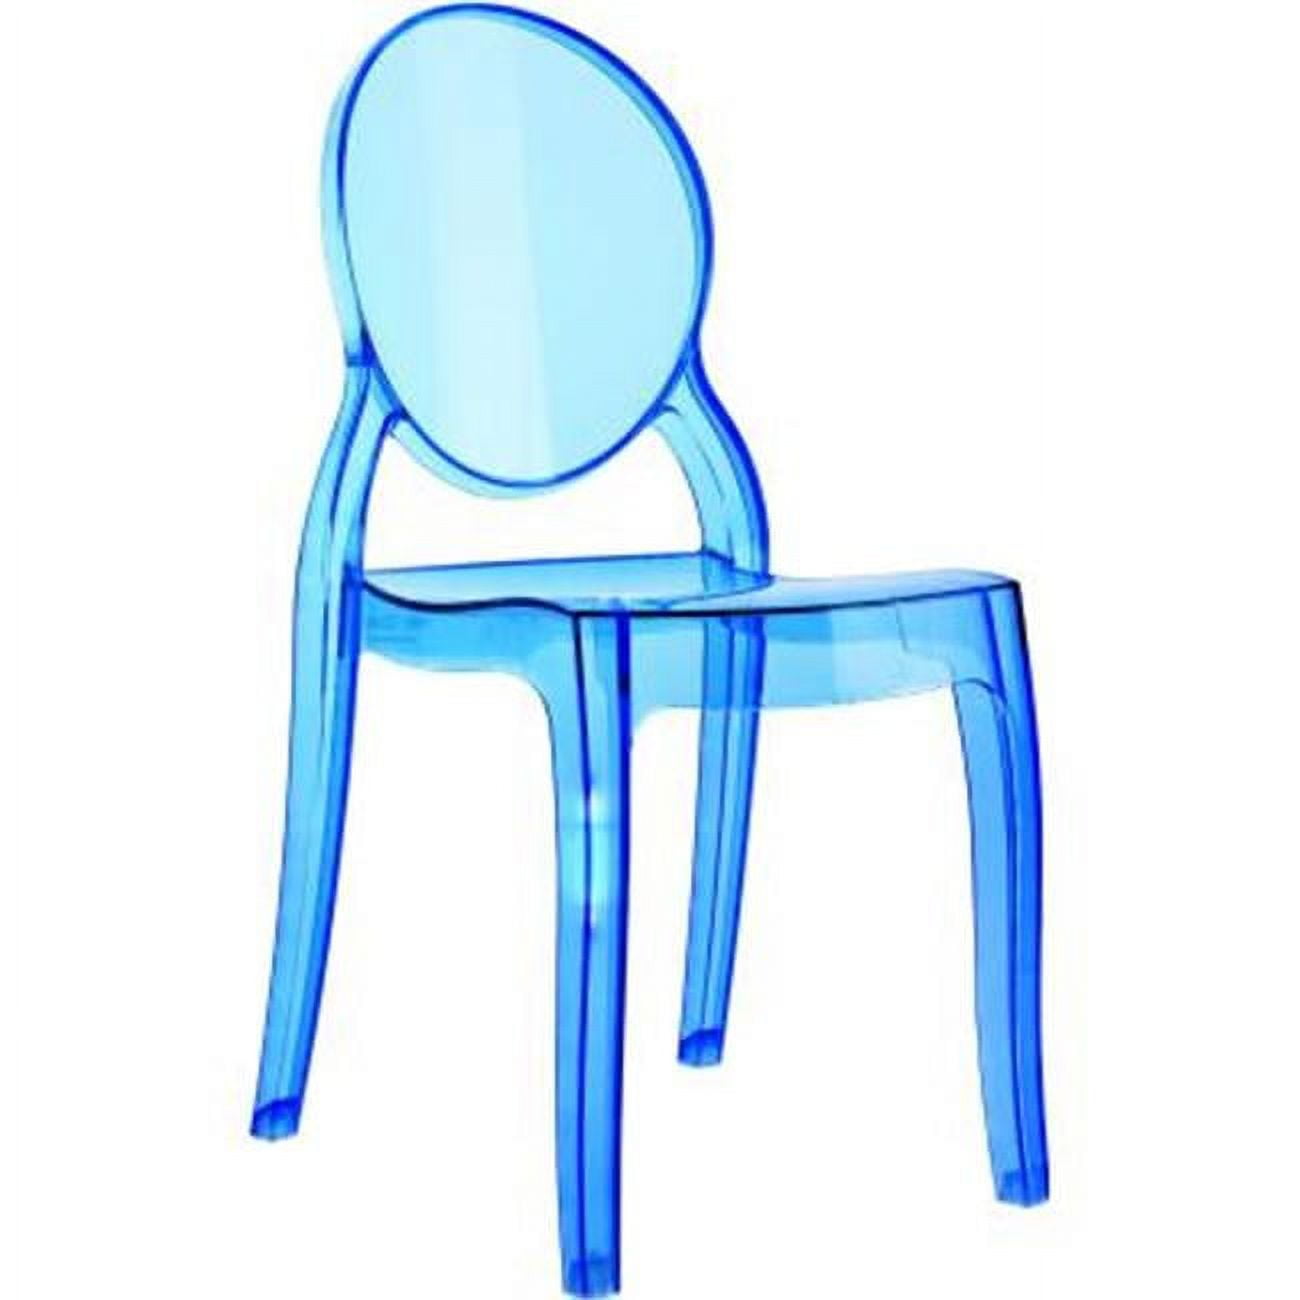 Baby Elizabeth Kids Chair, Transparent Blue